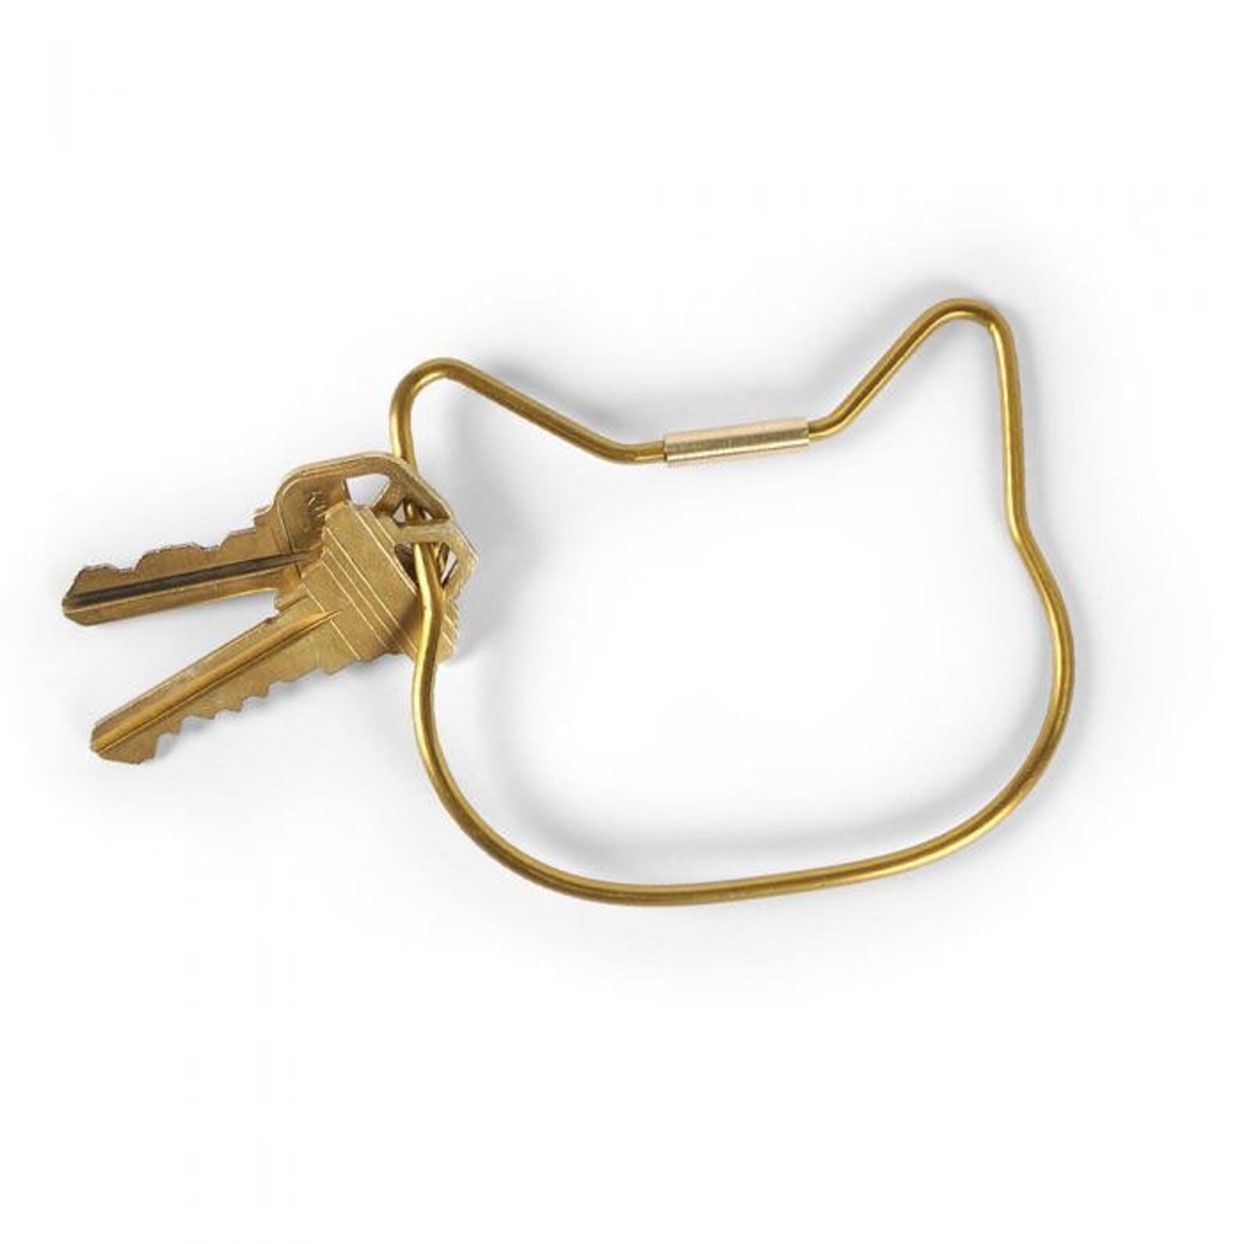 Brass Cat Key Ring